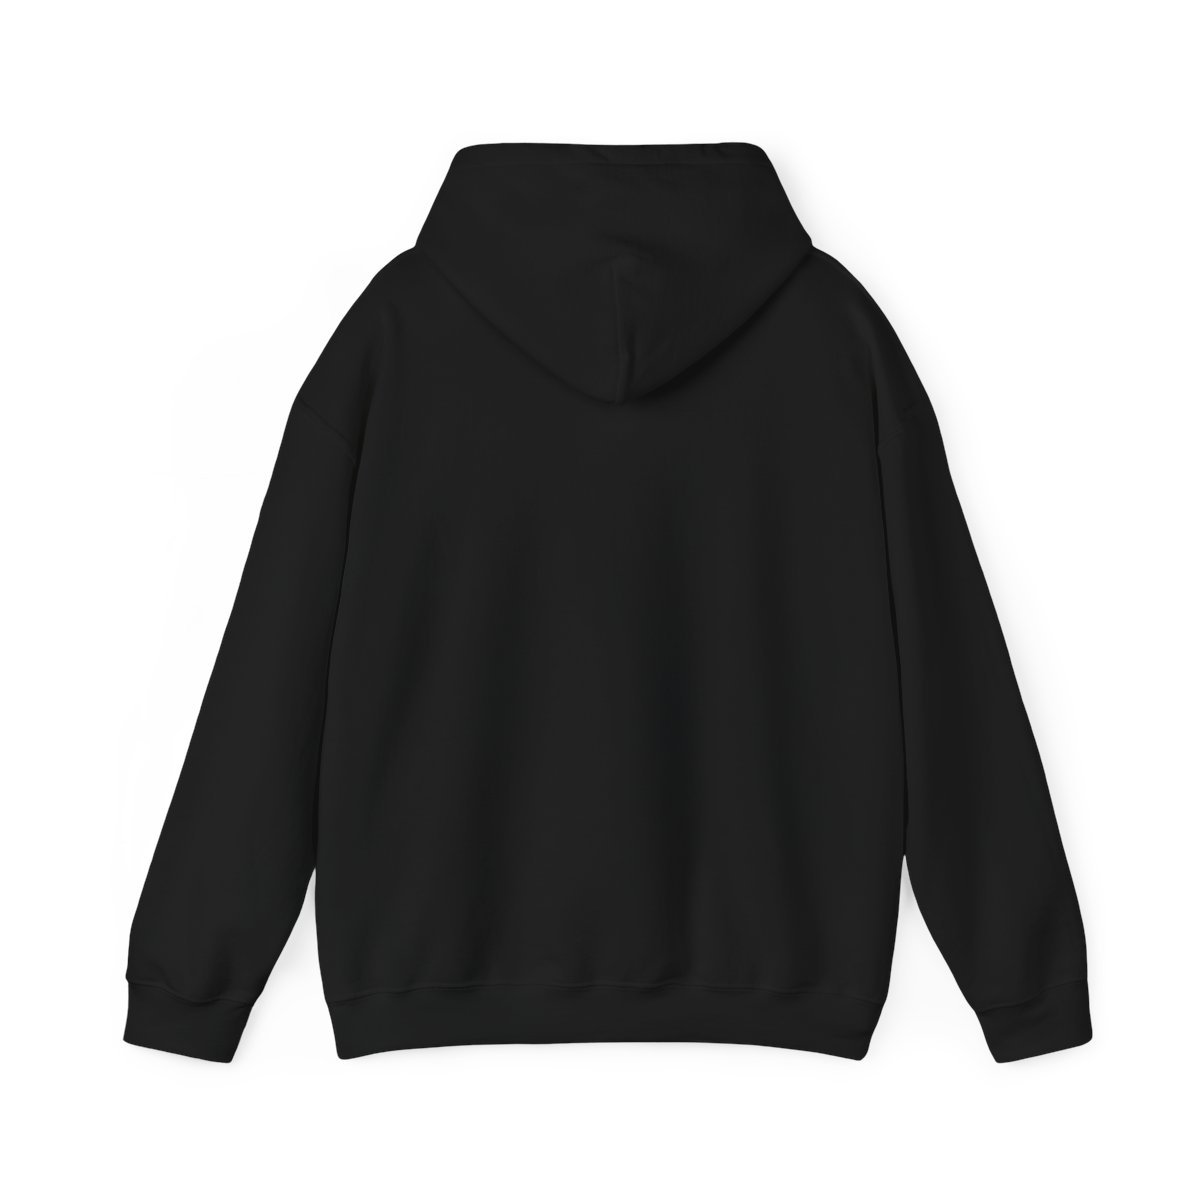 Big Rev – Make A Stand Pullover Hooded Sweatshirt